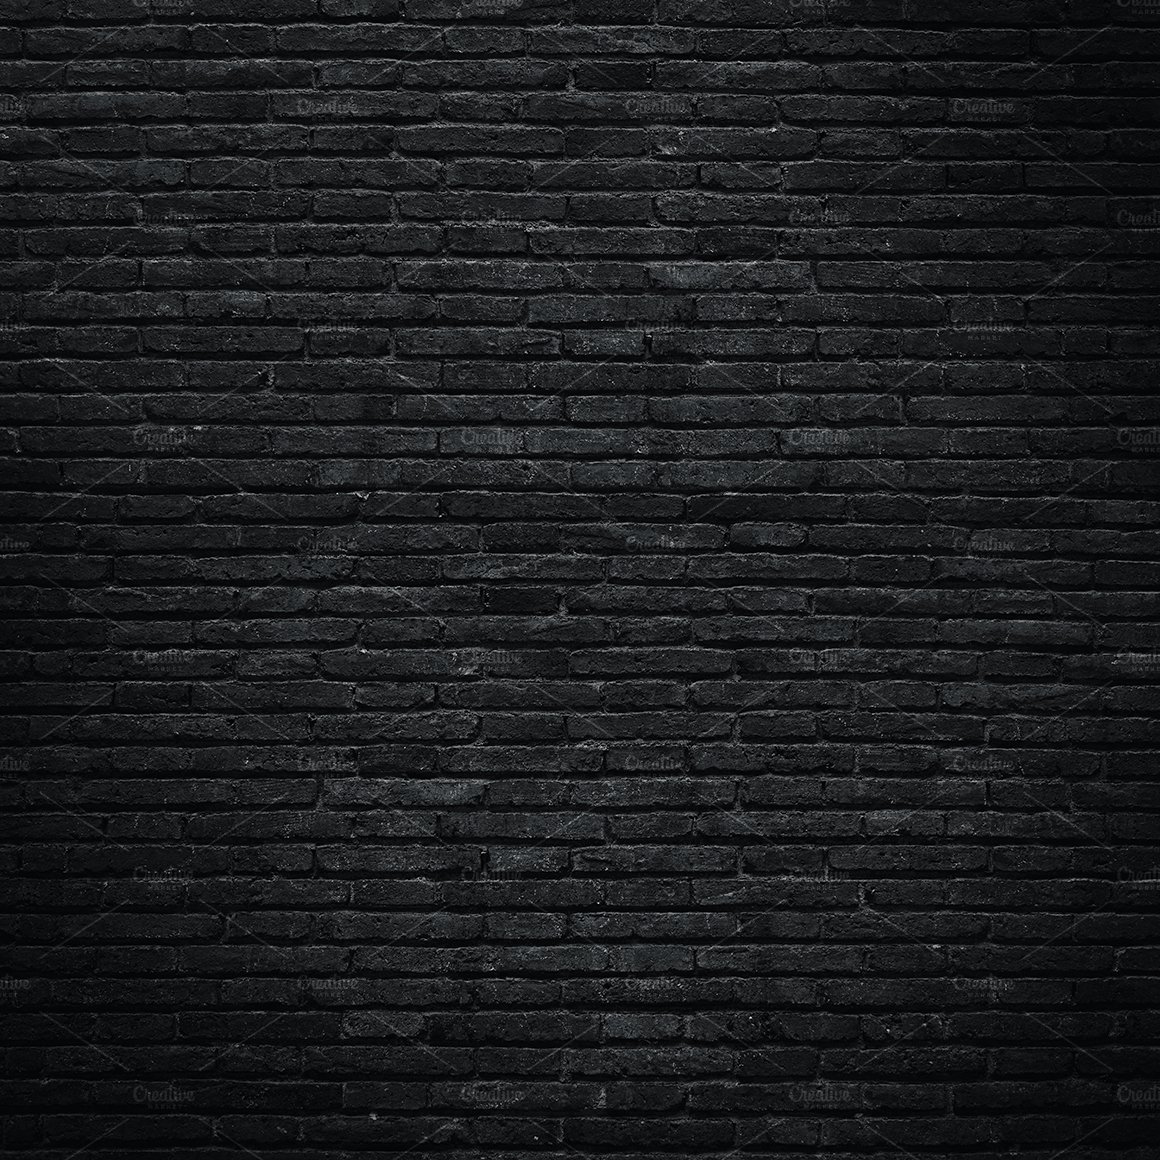 Black brick wall preview image.